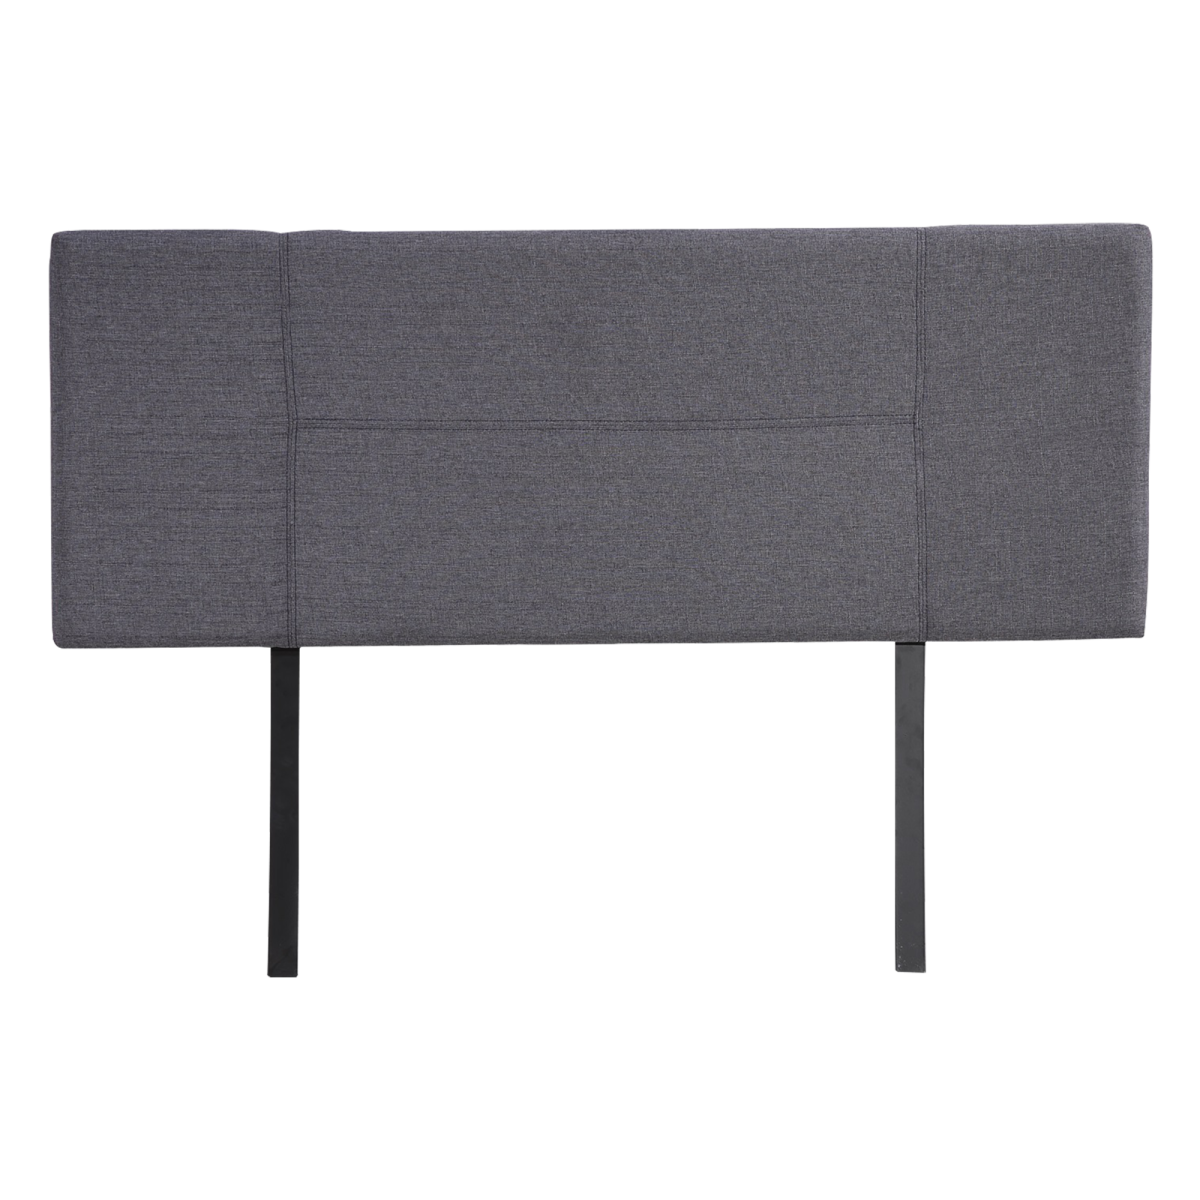 Linen Fabric Bed Headboard Bedhead – DOUBLE, Grey